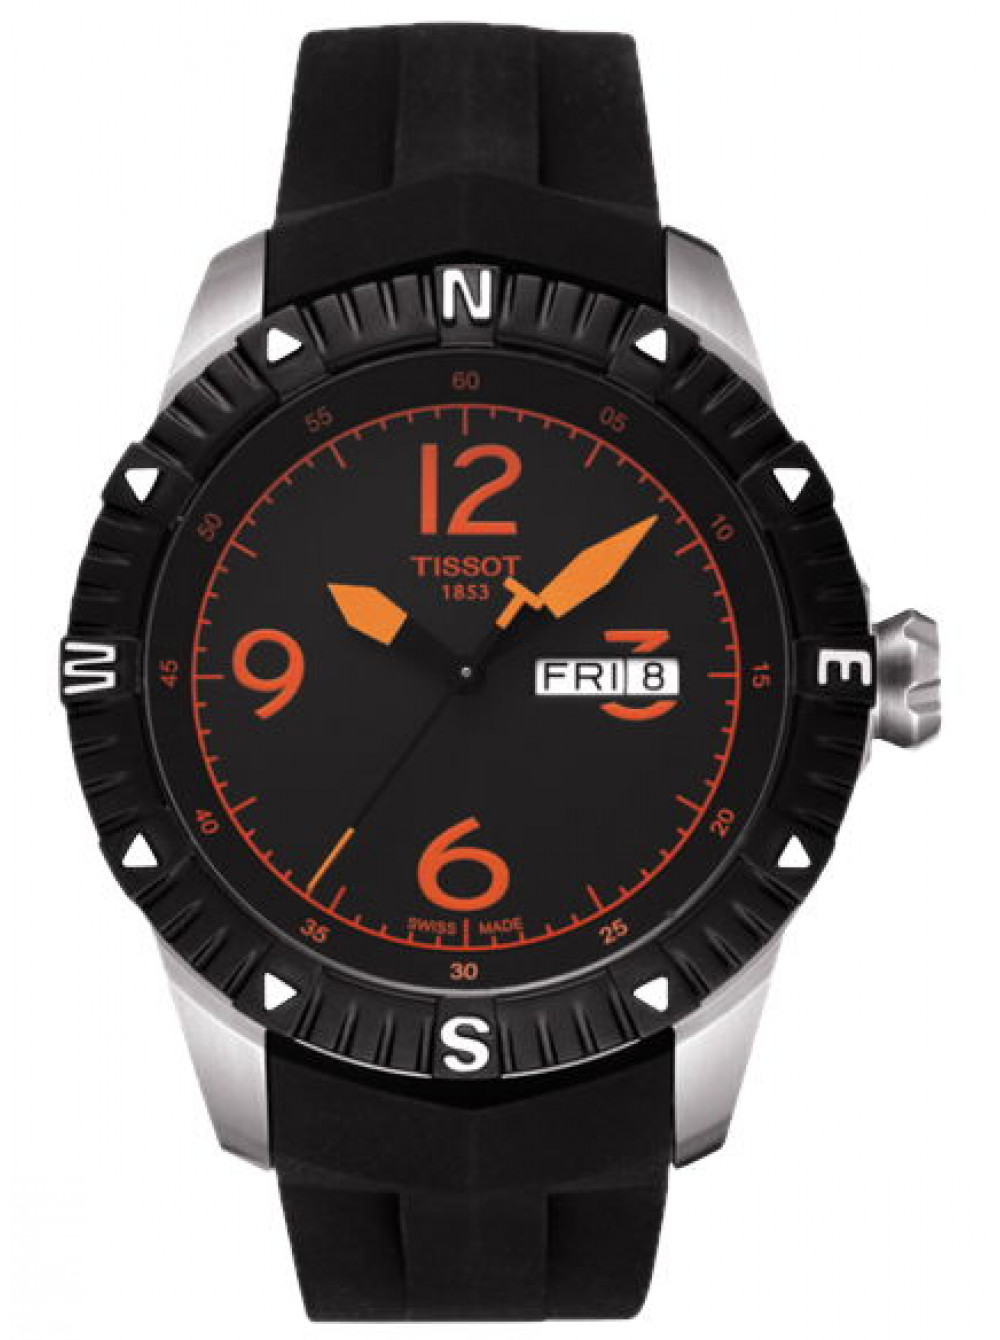 Часы t sport. Tissot Navigator. Тиссот часы навигатор. Tissot часы мужские Navigator. Tissot t-Navigator t062.430.17.0.